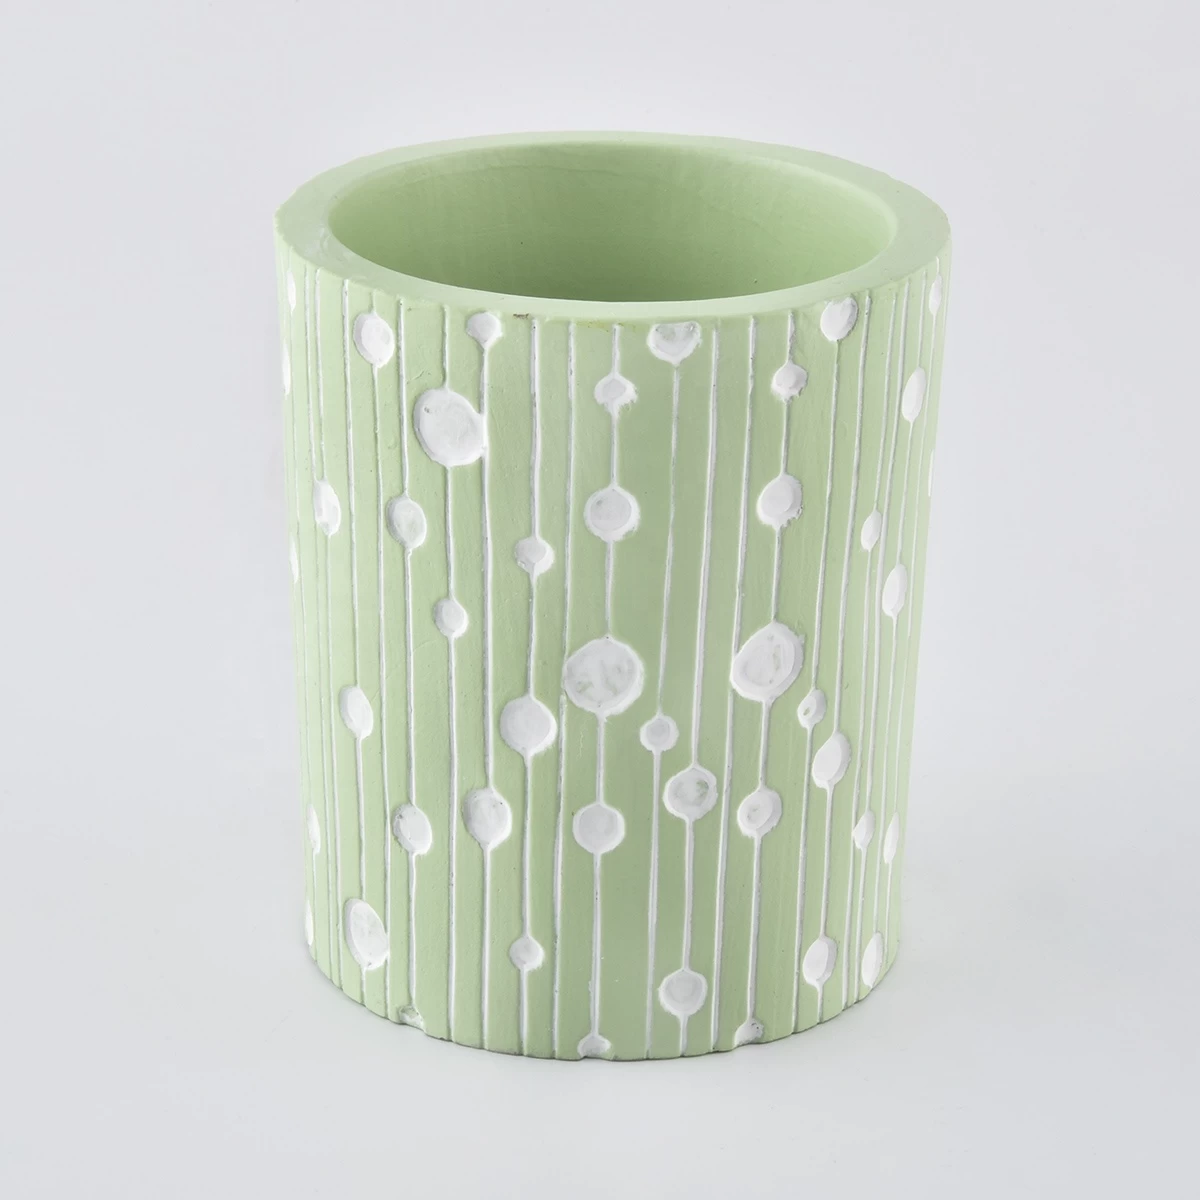 OEM/ODM tealight ceramic candle vessel 10oz